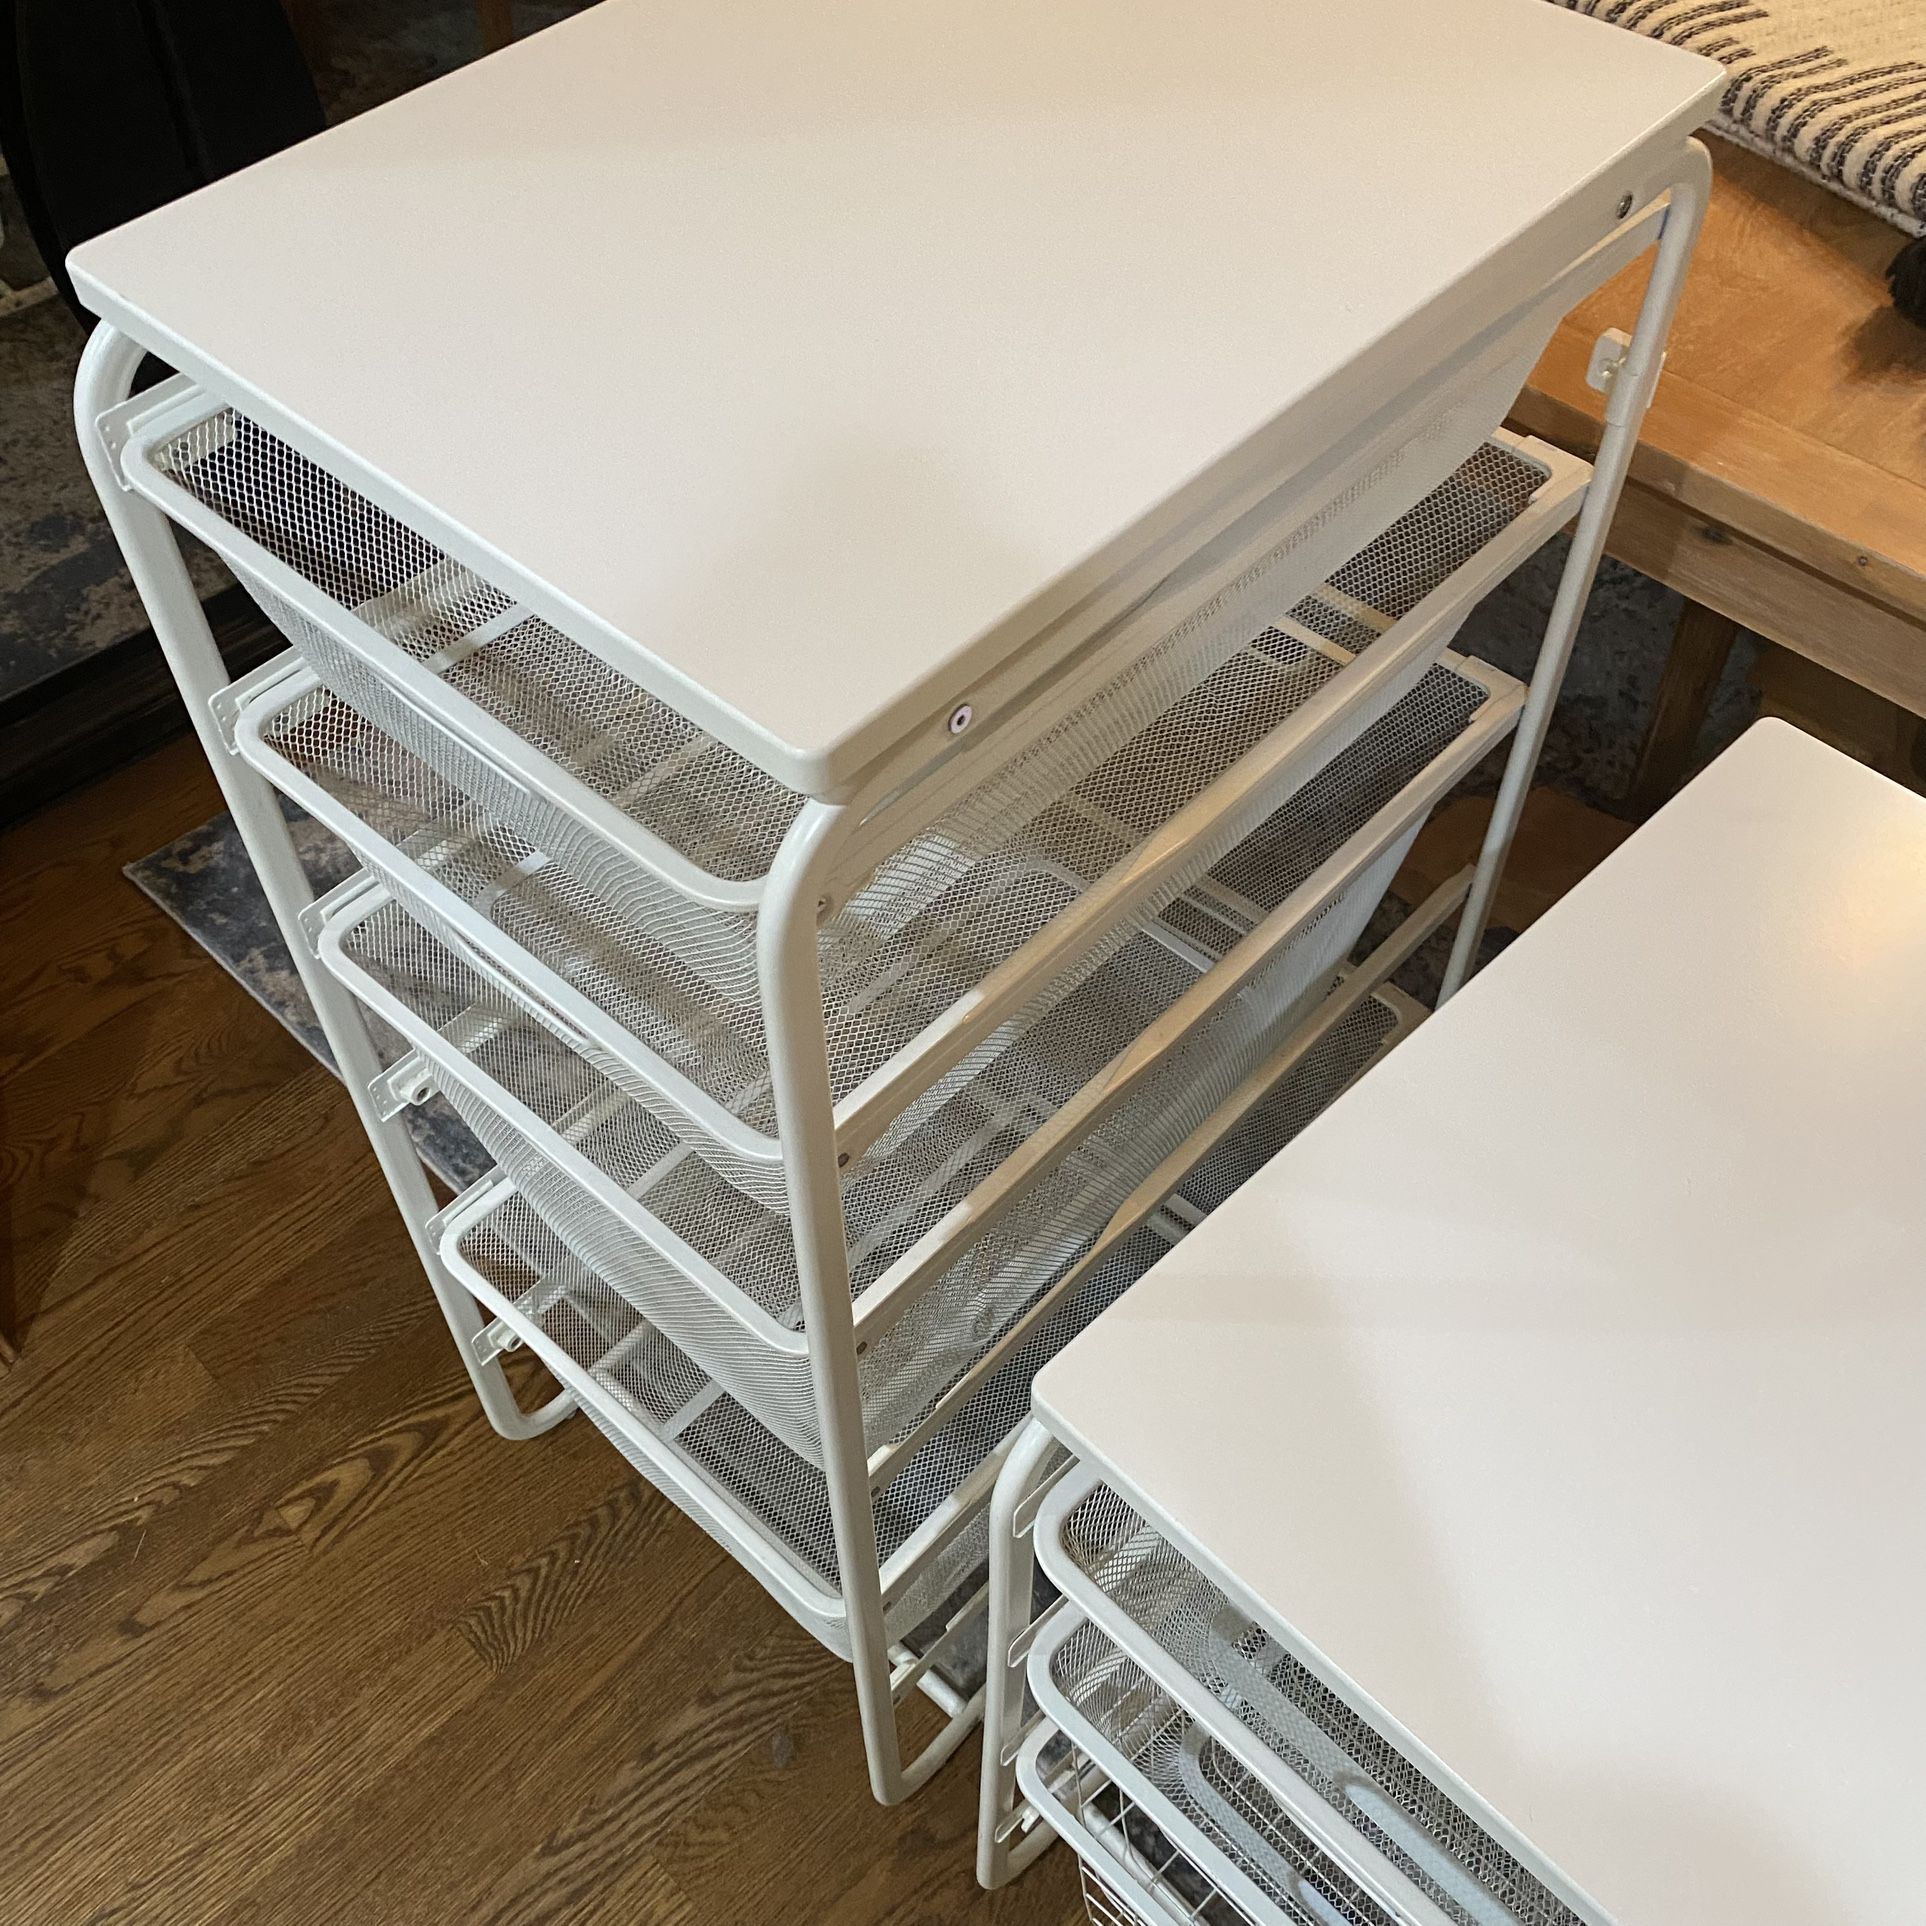 IKEA ALGOT storage System Set for Sale in Redmond, WA - OfferUp